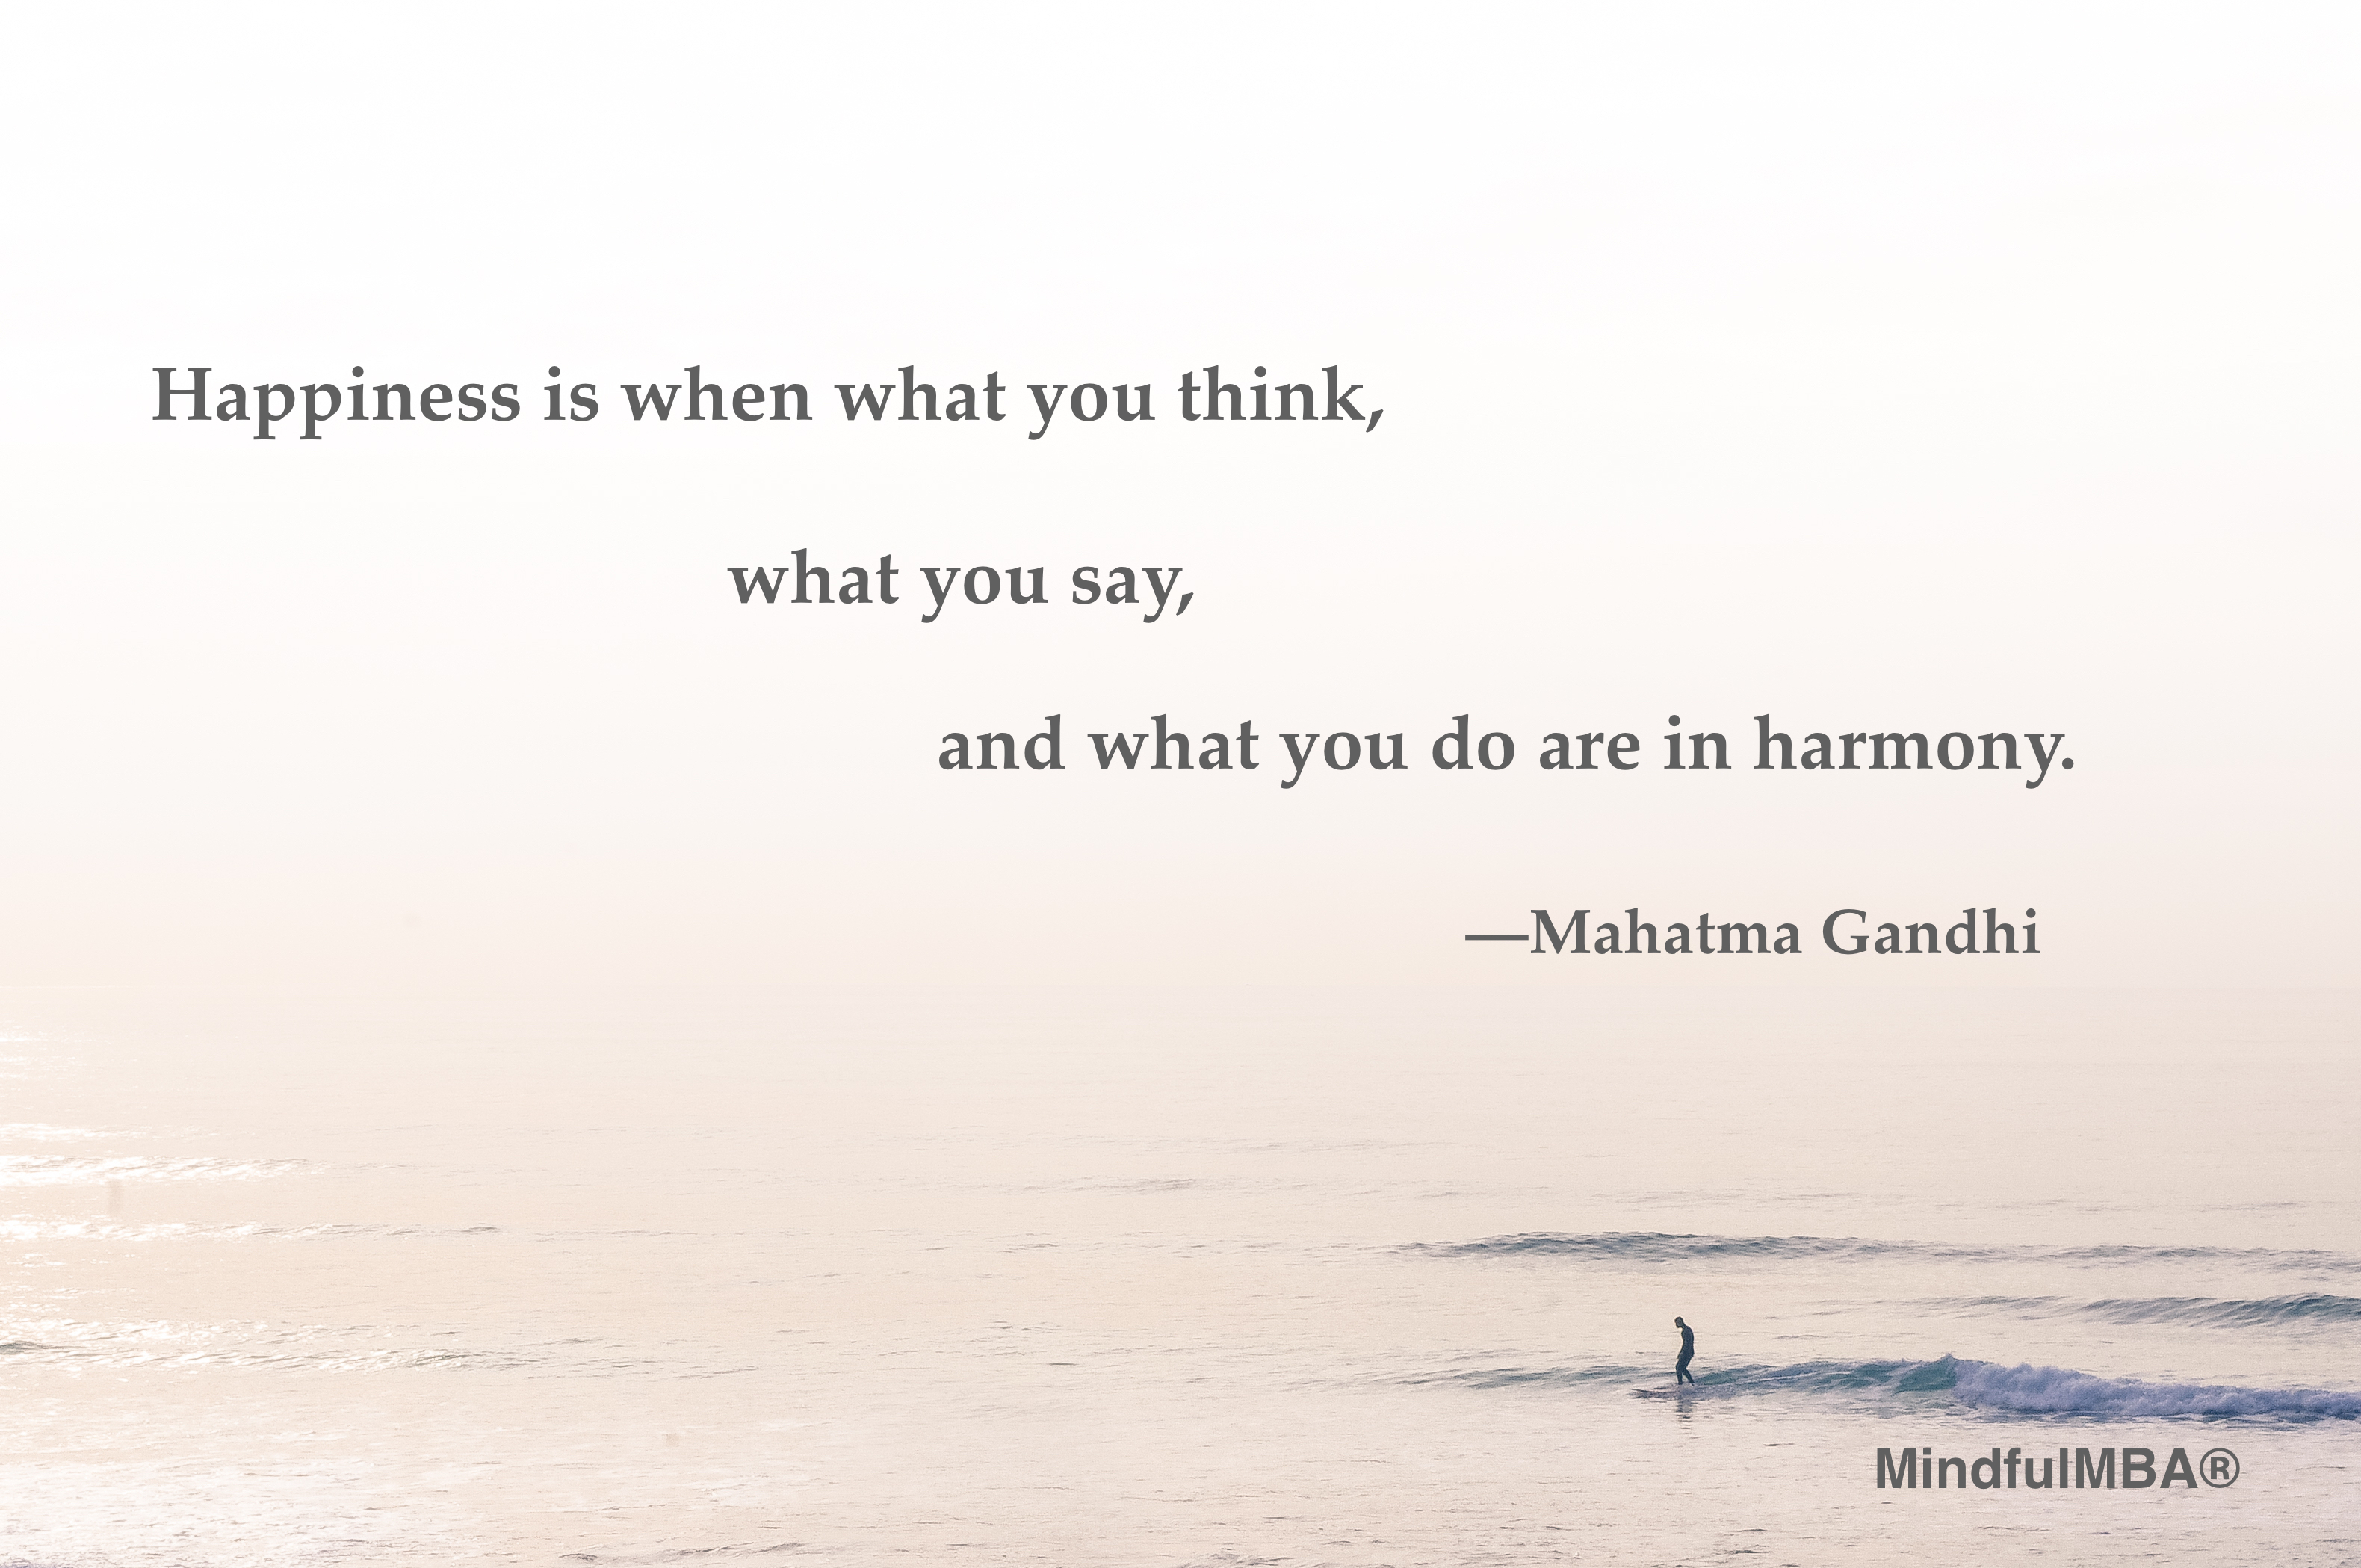 Gandhi_Happiness Harmony quote w tag